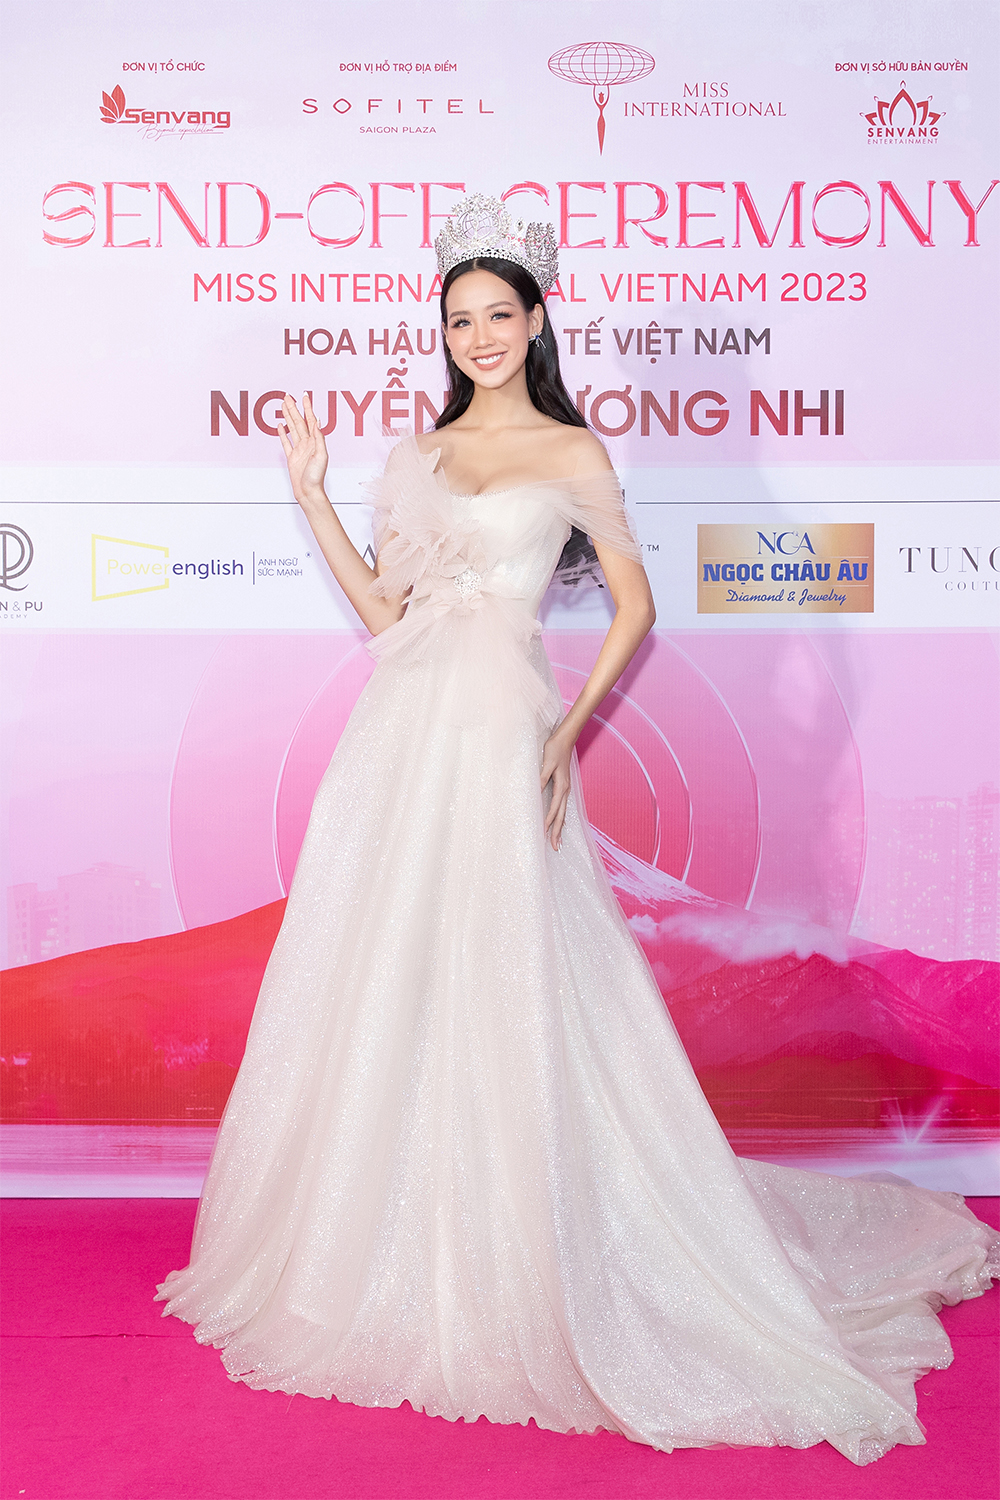 Harper's Bazaar_Miss International Việt Nam 2023 Phương Nhi_08